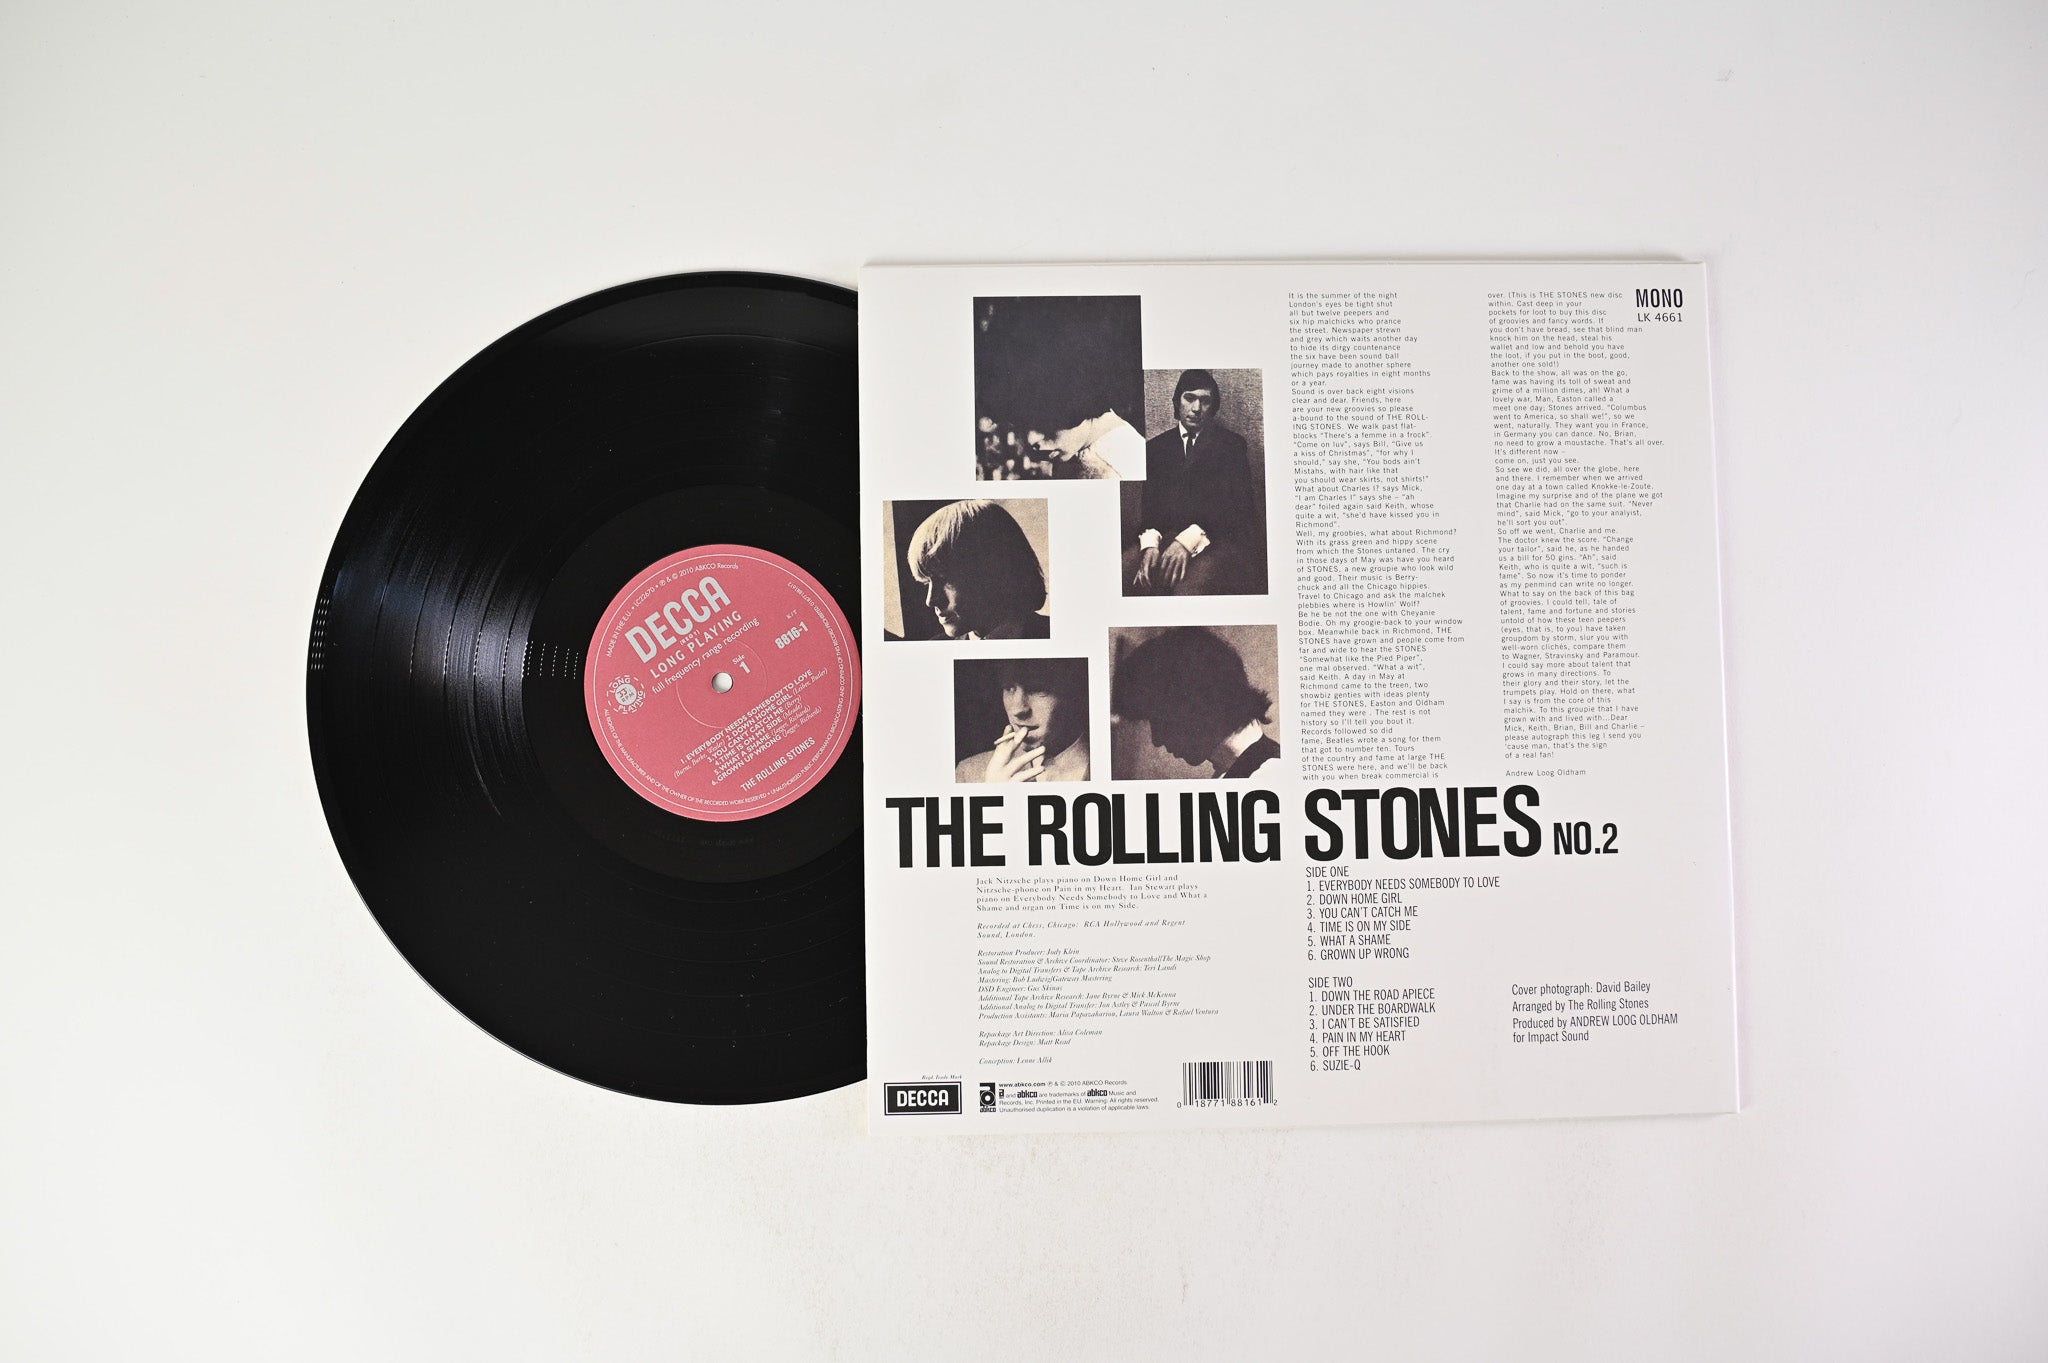 The Rolling Stones - No.2 on ABKCO Mono 180 Gram Reissue